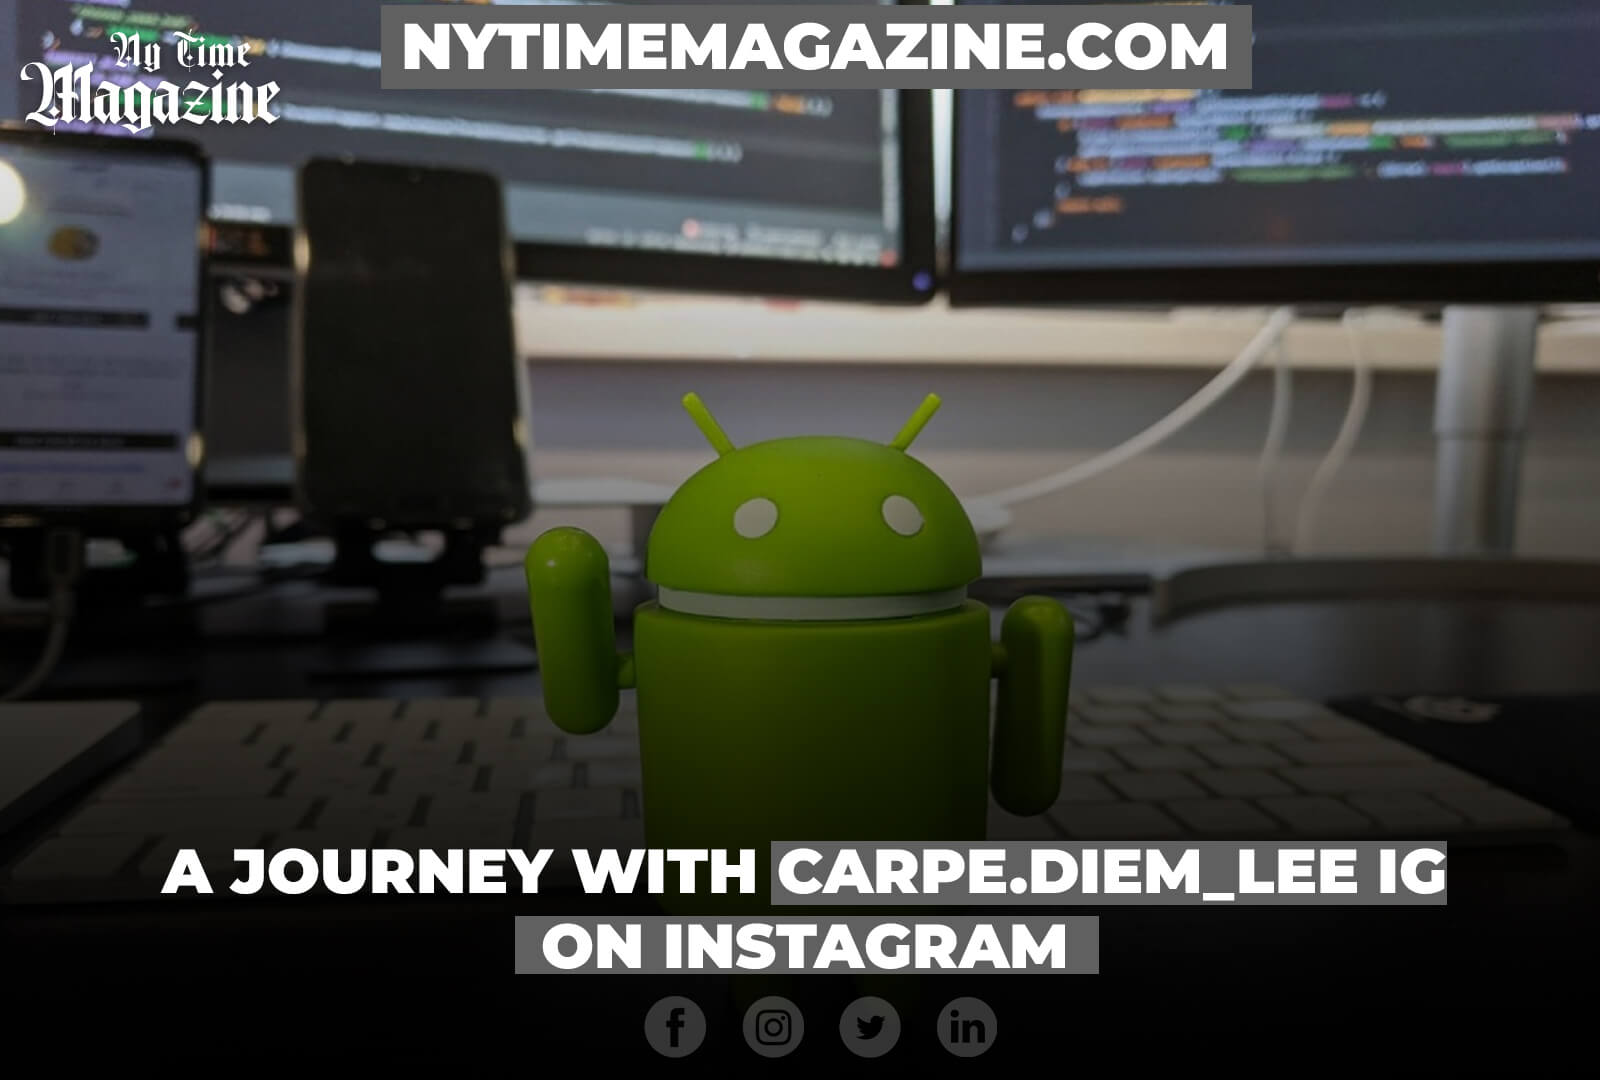 A Journey with carpe.diem_lee ig on Instagram